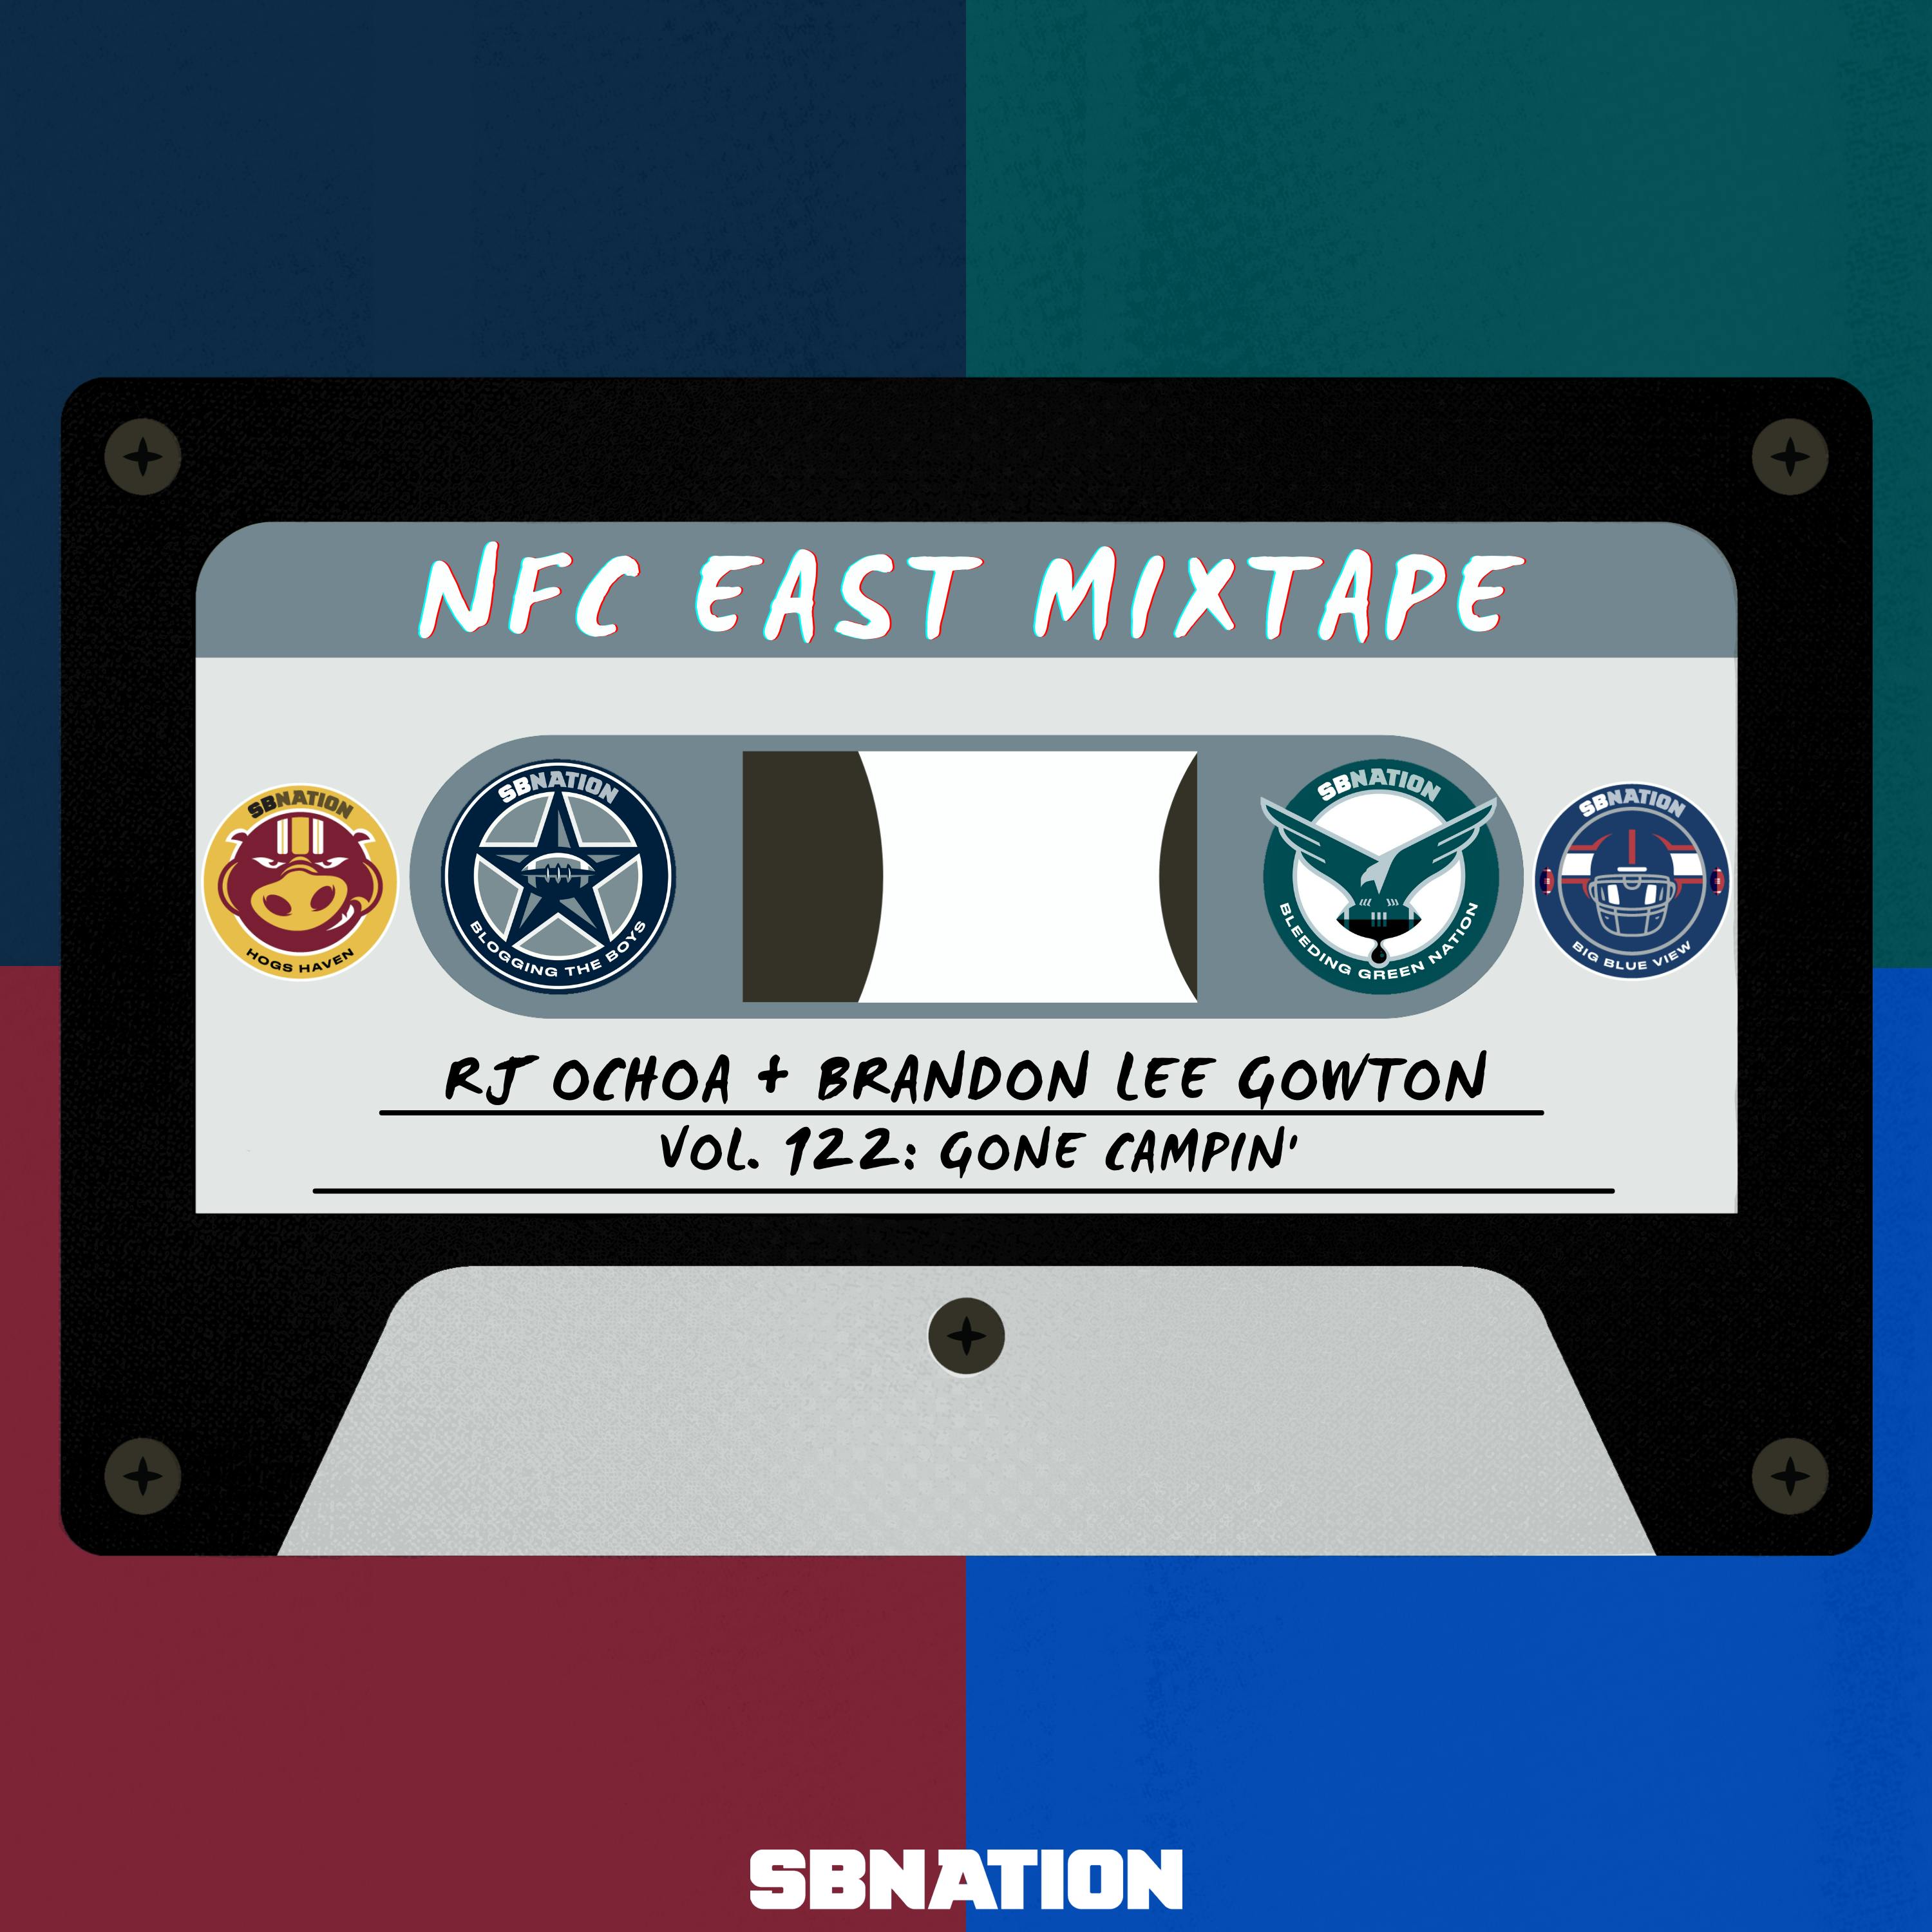 NFC East Mixtape Vol.122: Gone campin'